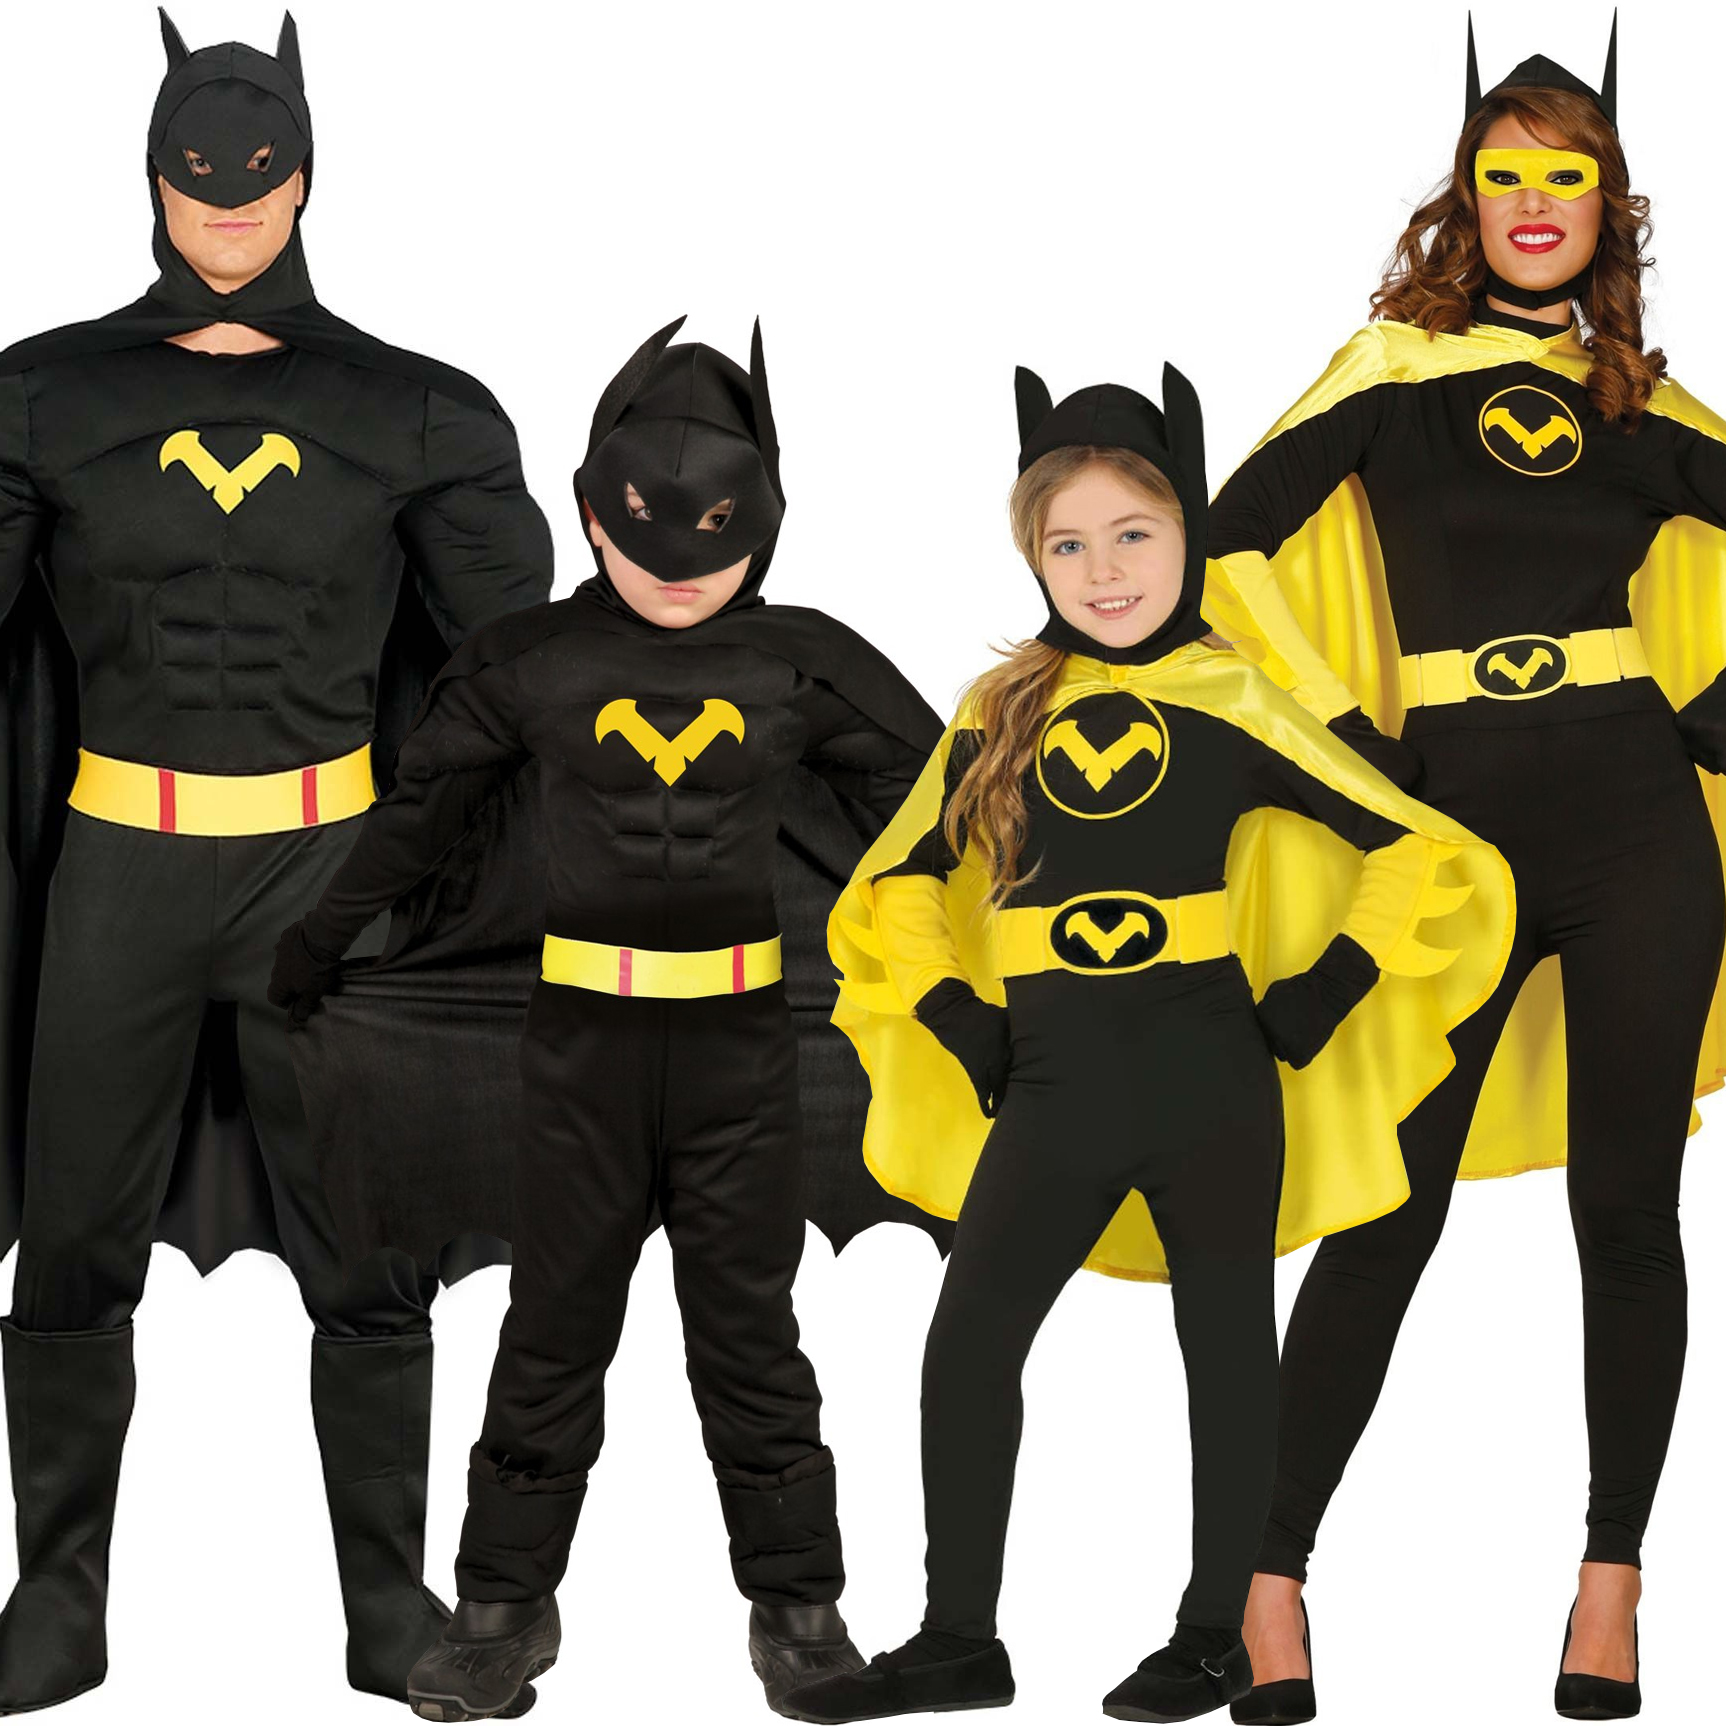 Comprar online Disfraces en grupo de Batman y Batgirl